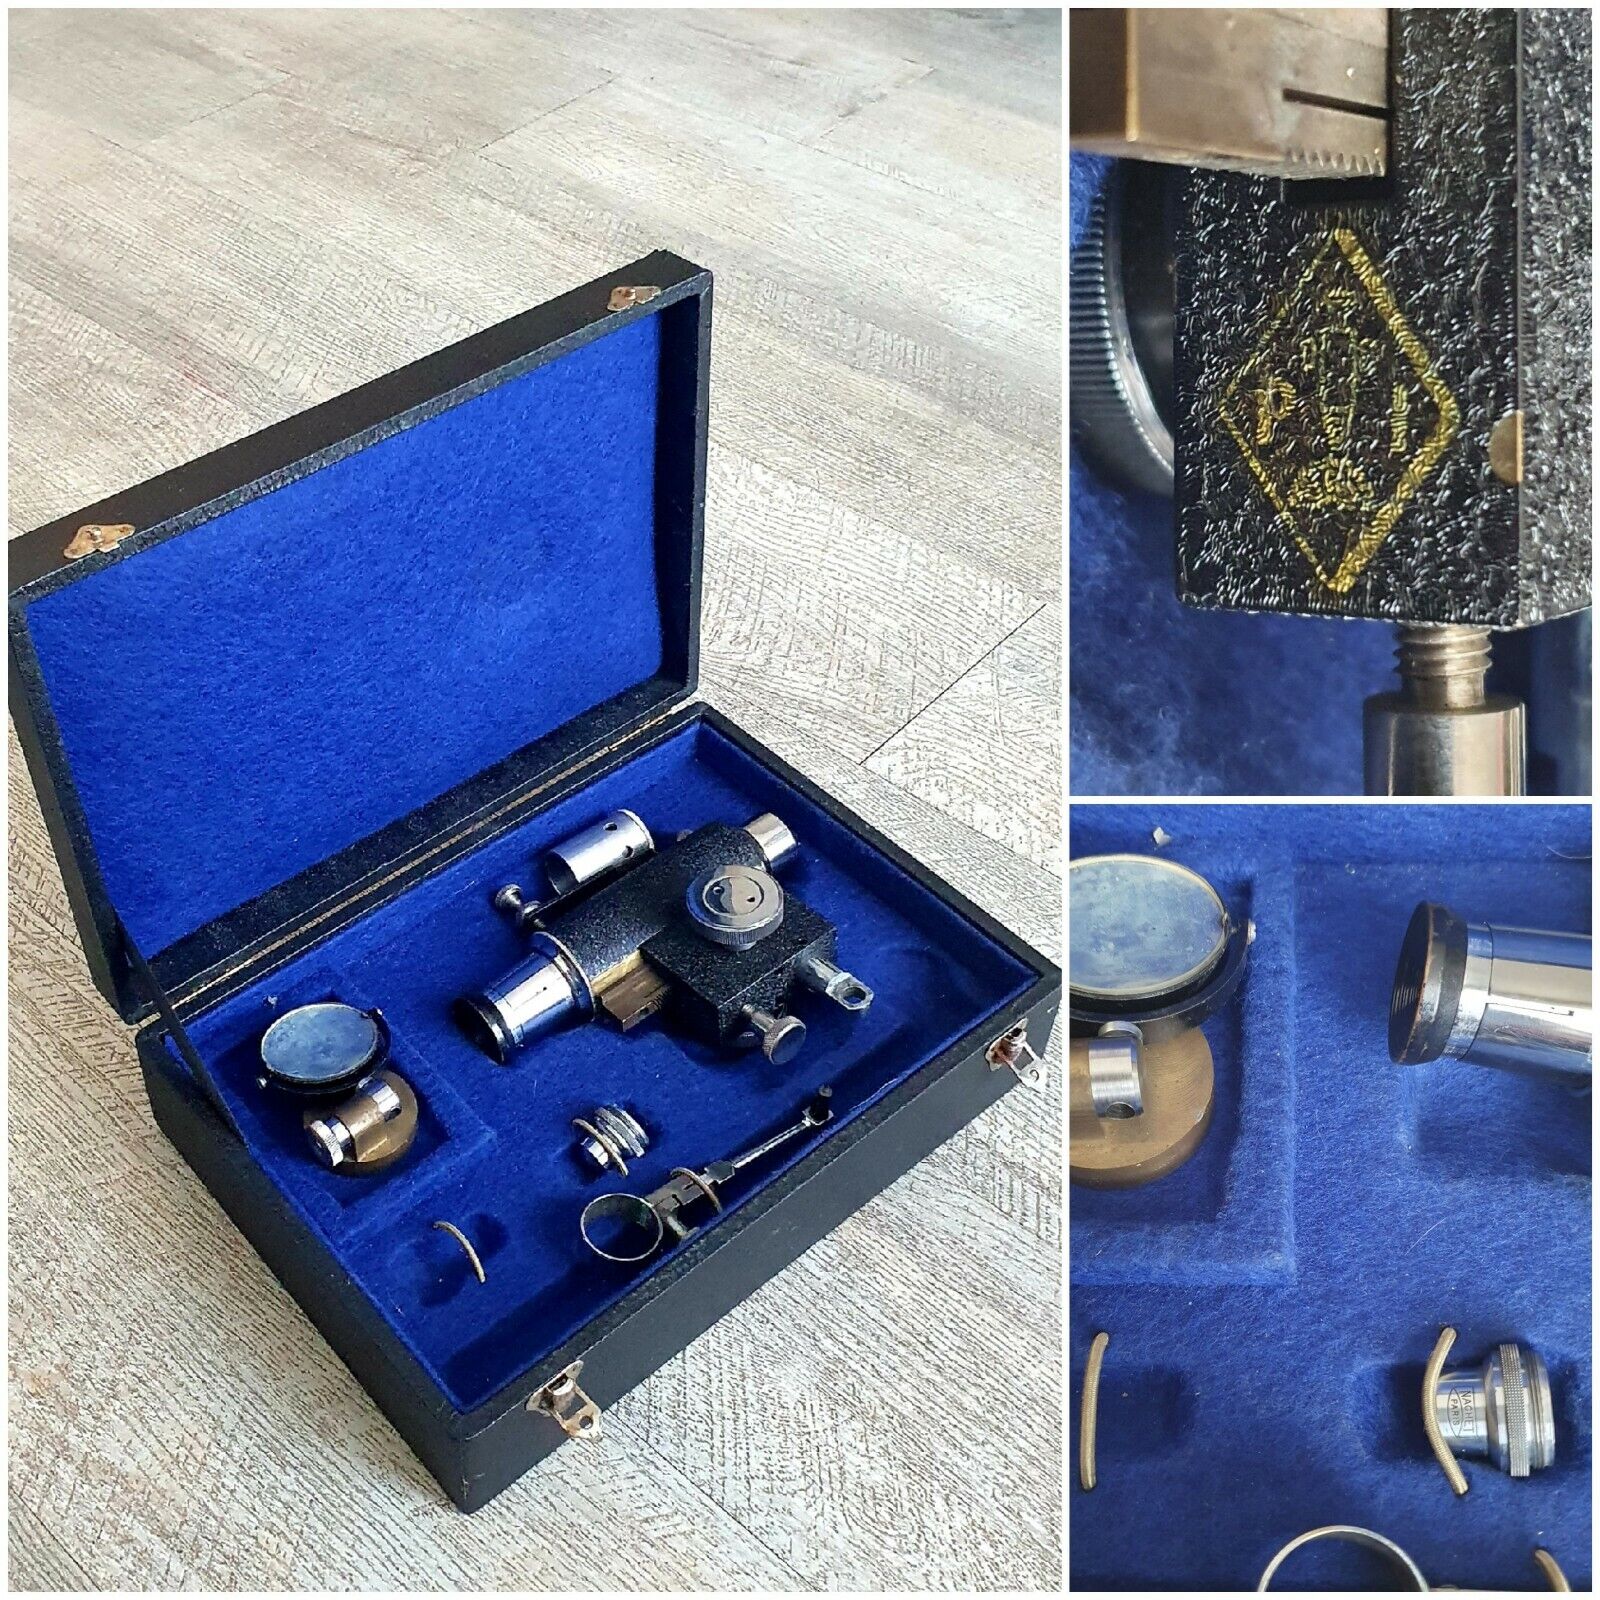 antique microscope parts in original box to identify. 